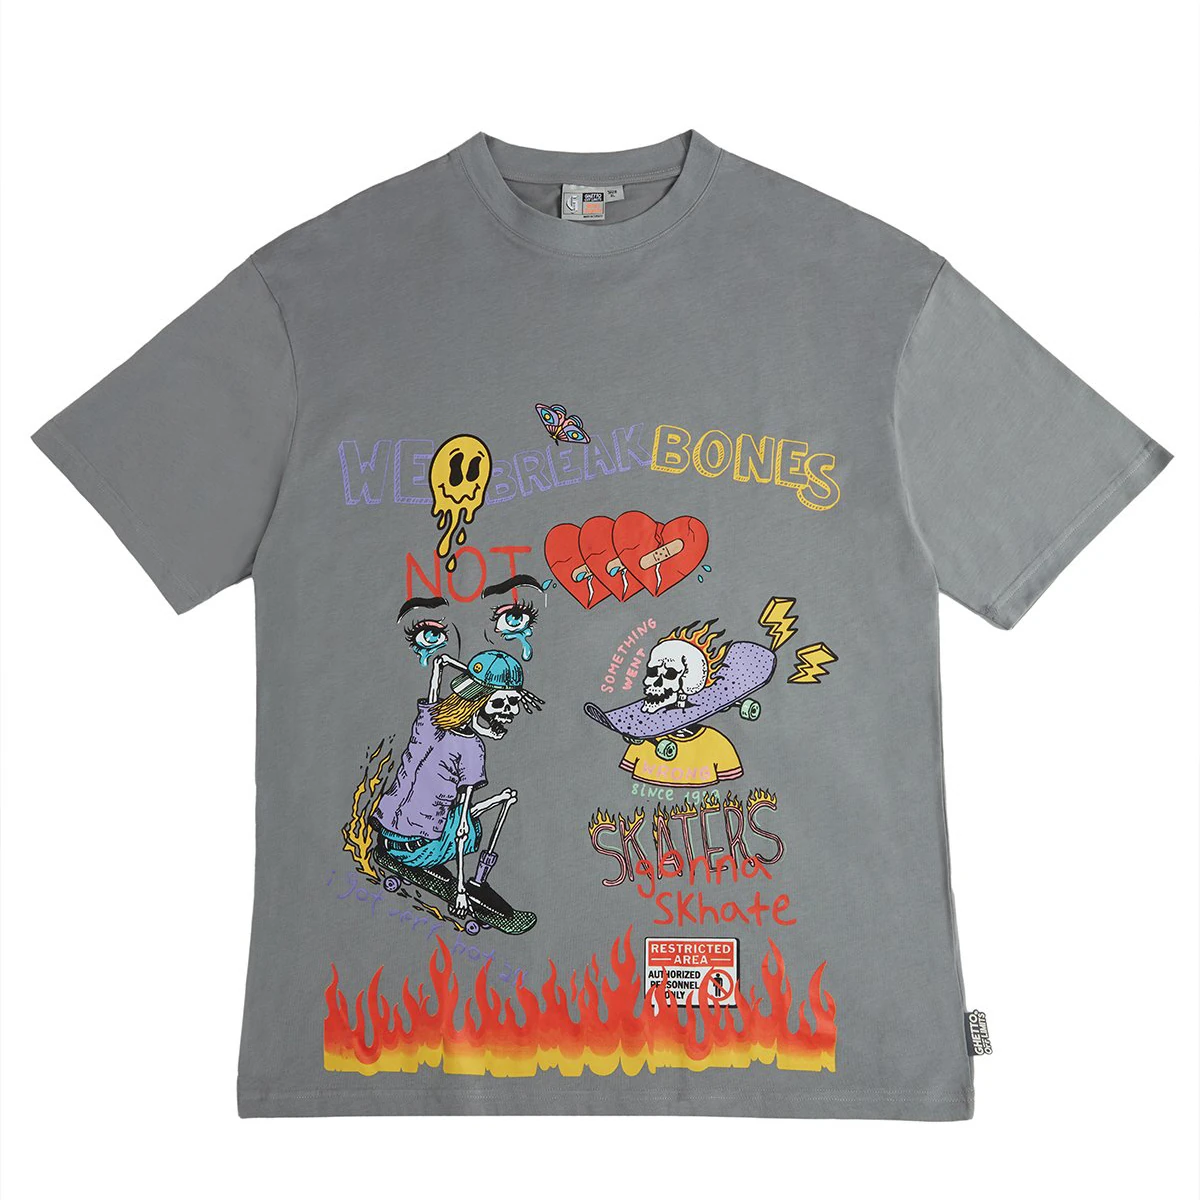 Ghetto Off Limits Whe Break Bones Grey Oversize T-Shirt TS-20006